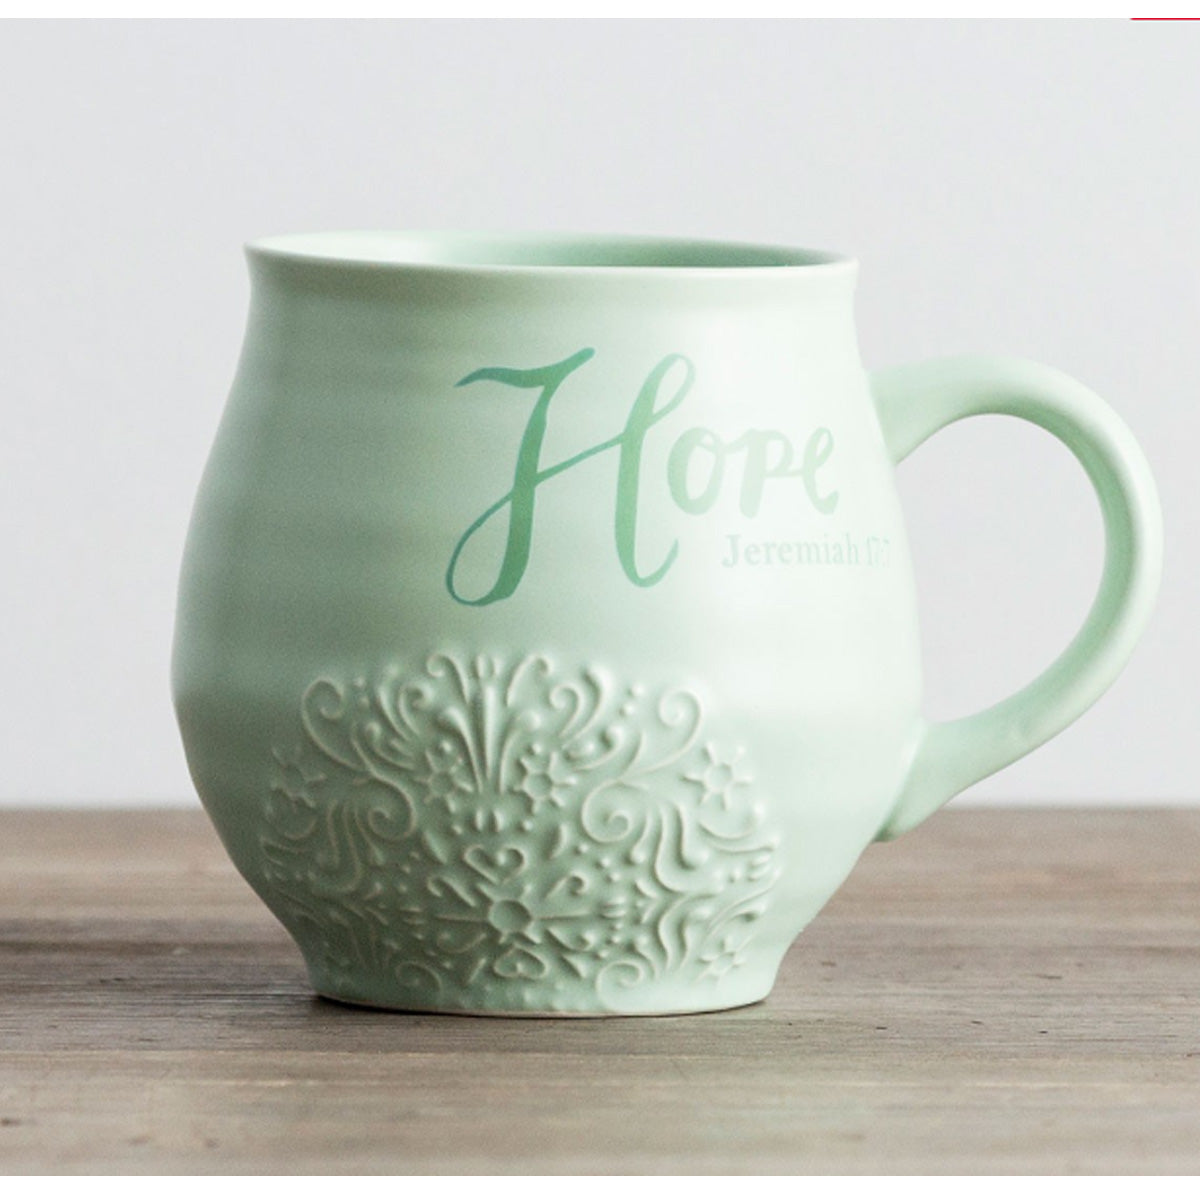 Hope - Stoneware Mug - Southern Grace Creations